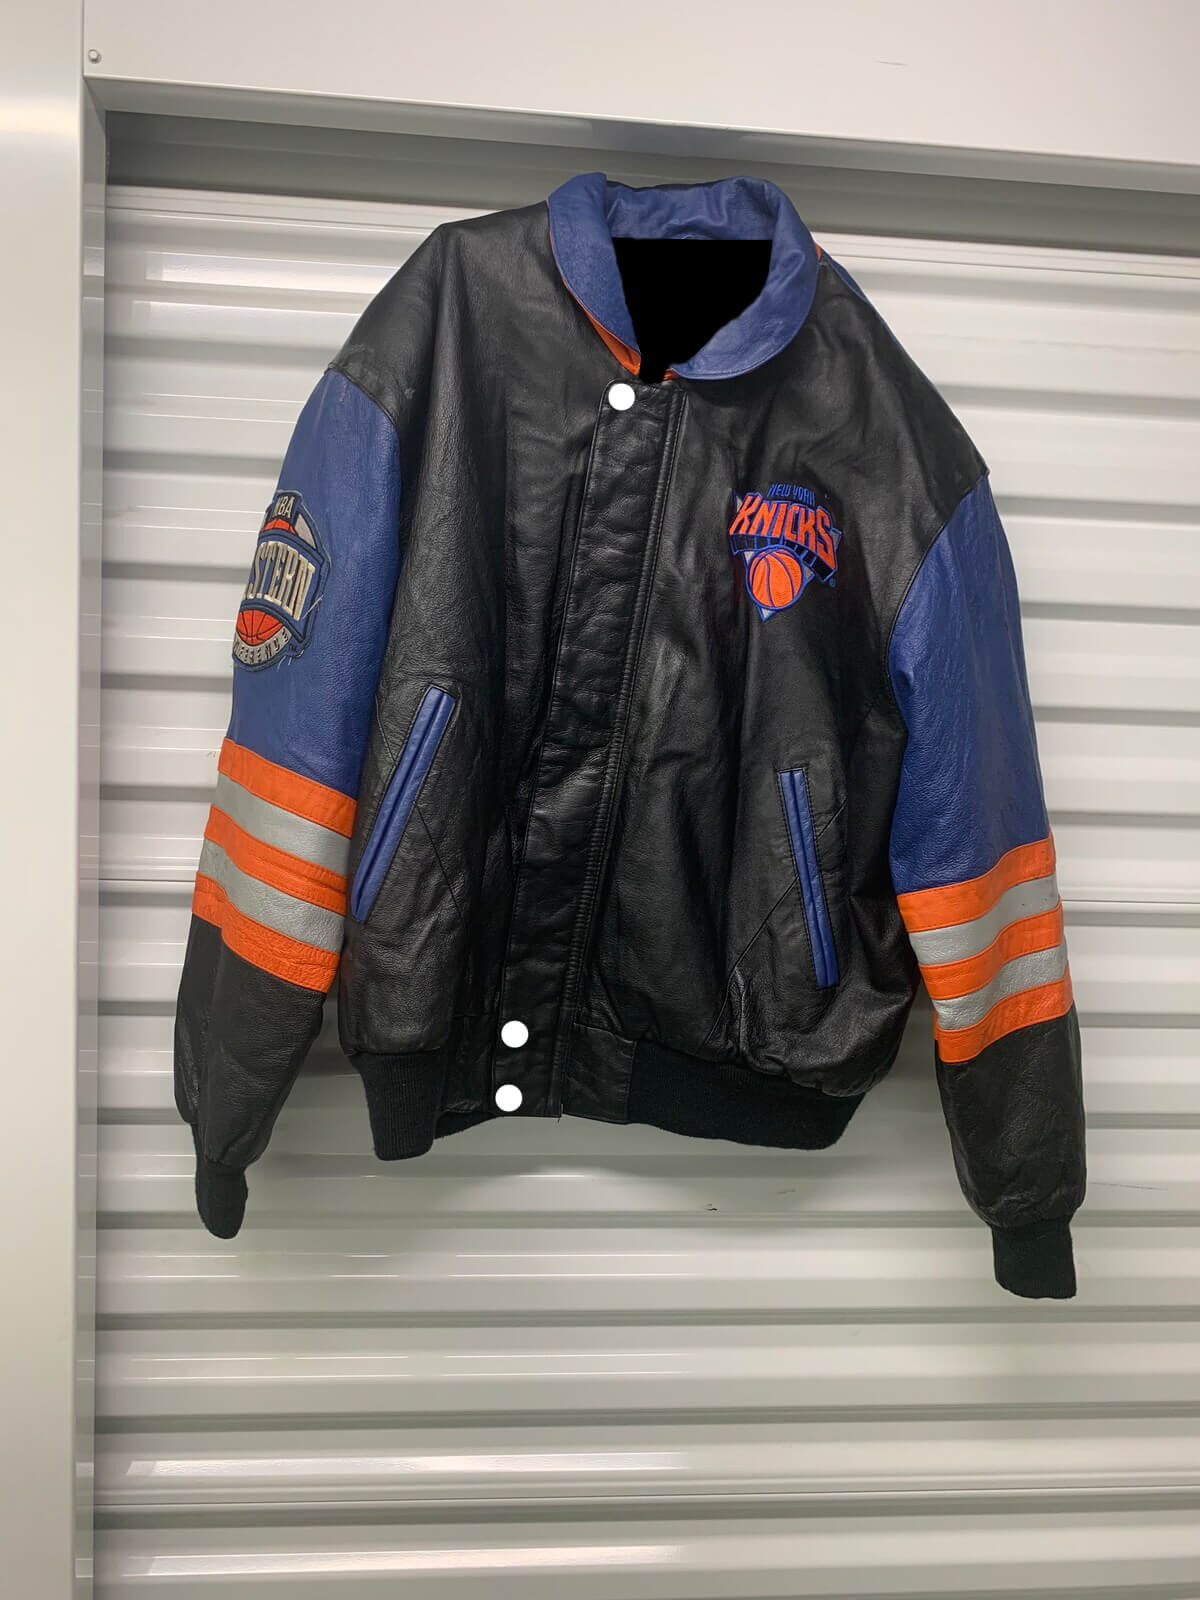 Maker of Jacket Black Leather Jackets Vintage 90s Chicago White Sox